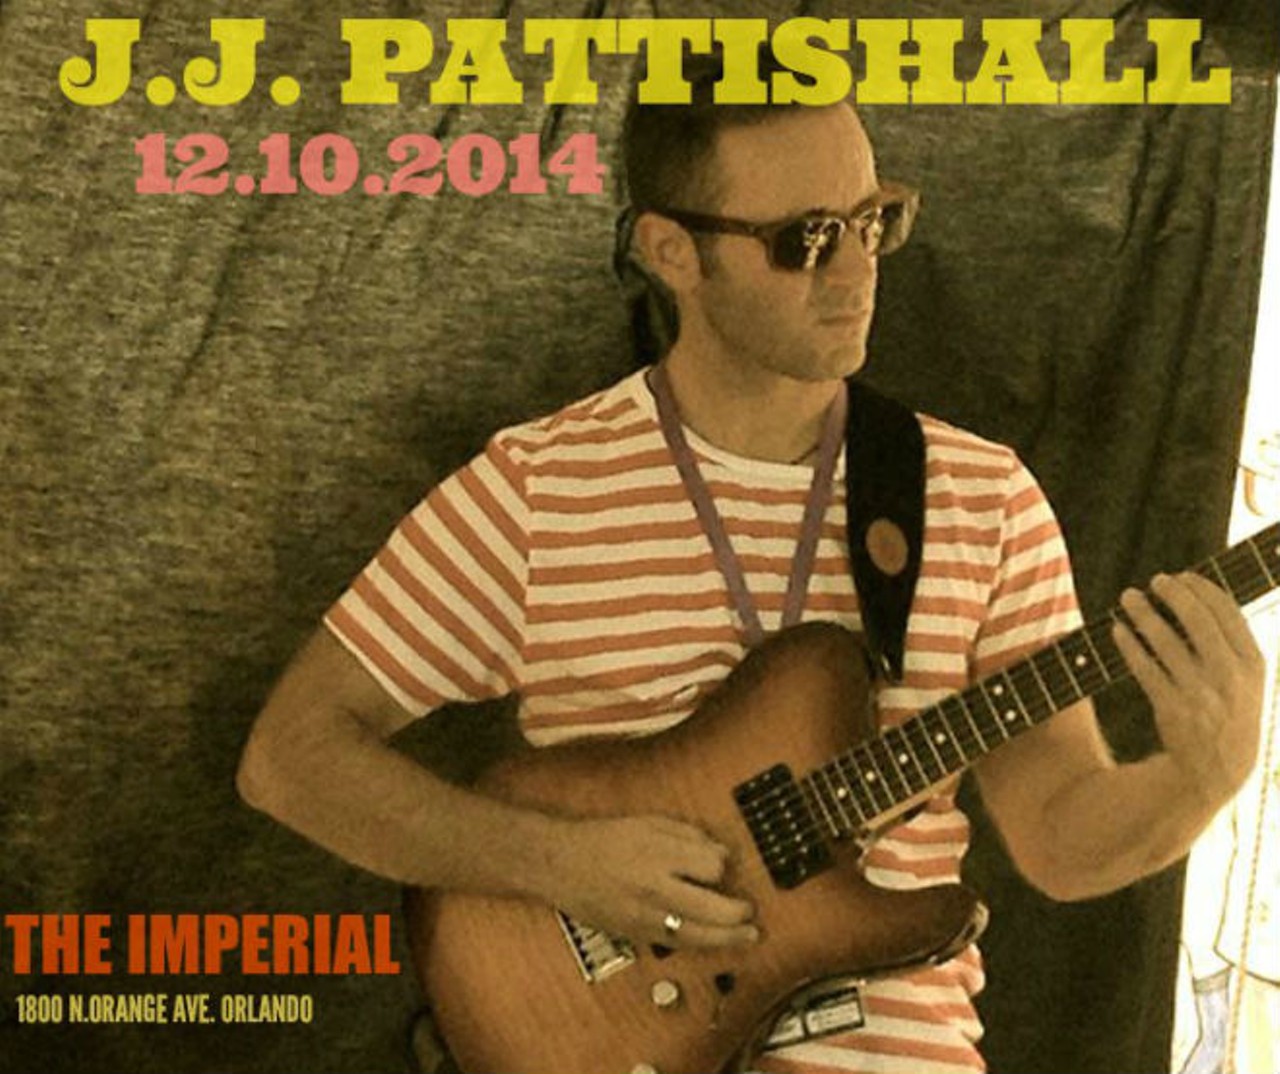 Wednesday, Dec. 10J.J. PattishallLive musicImage via the Imperial